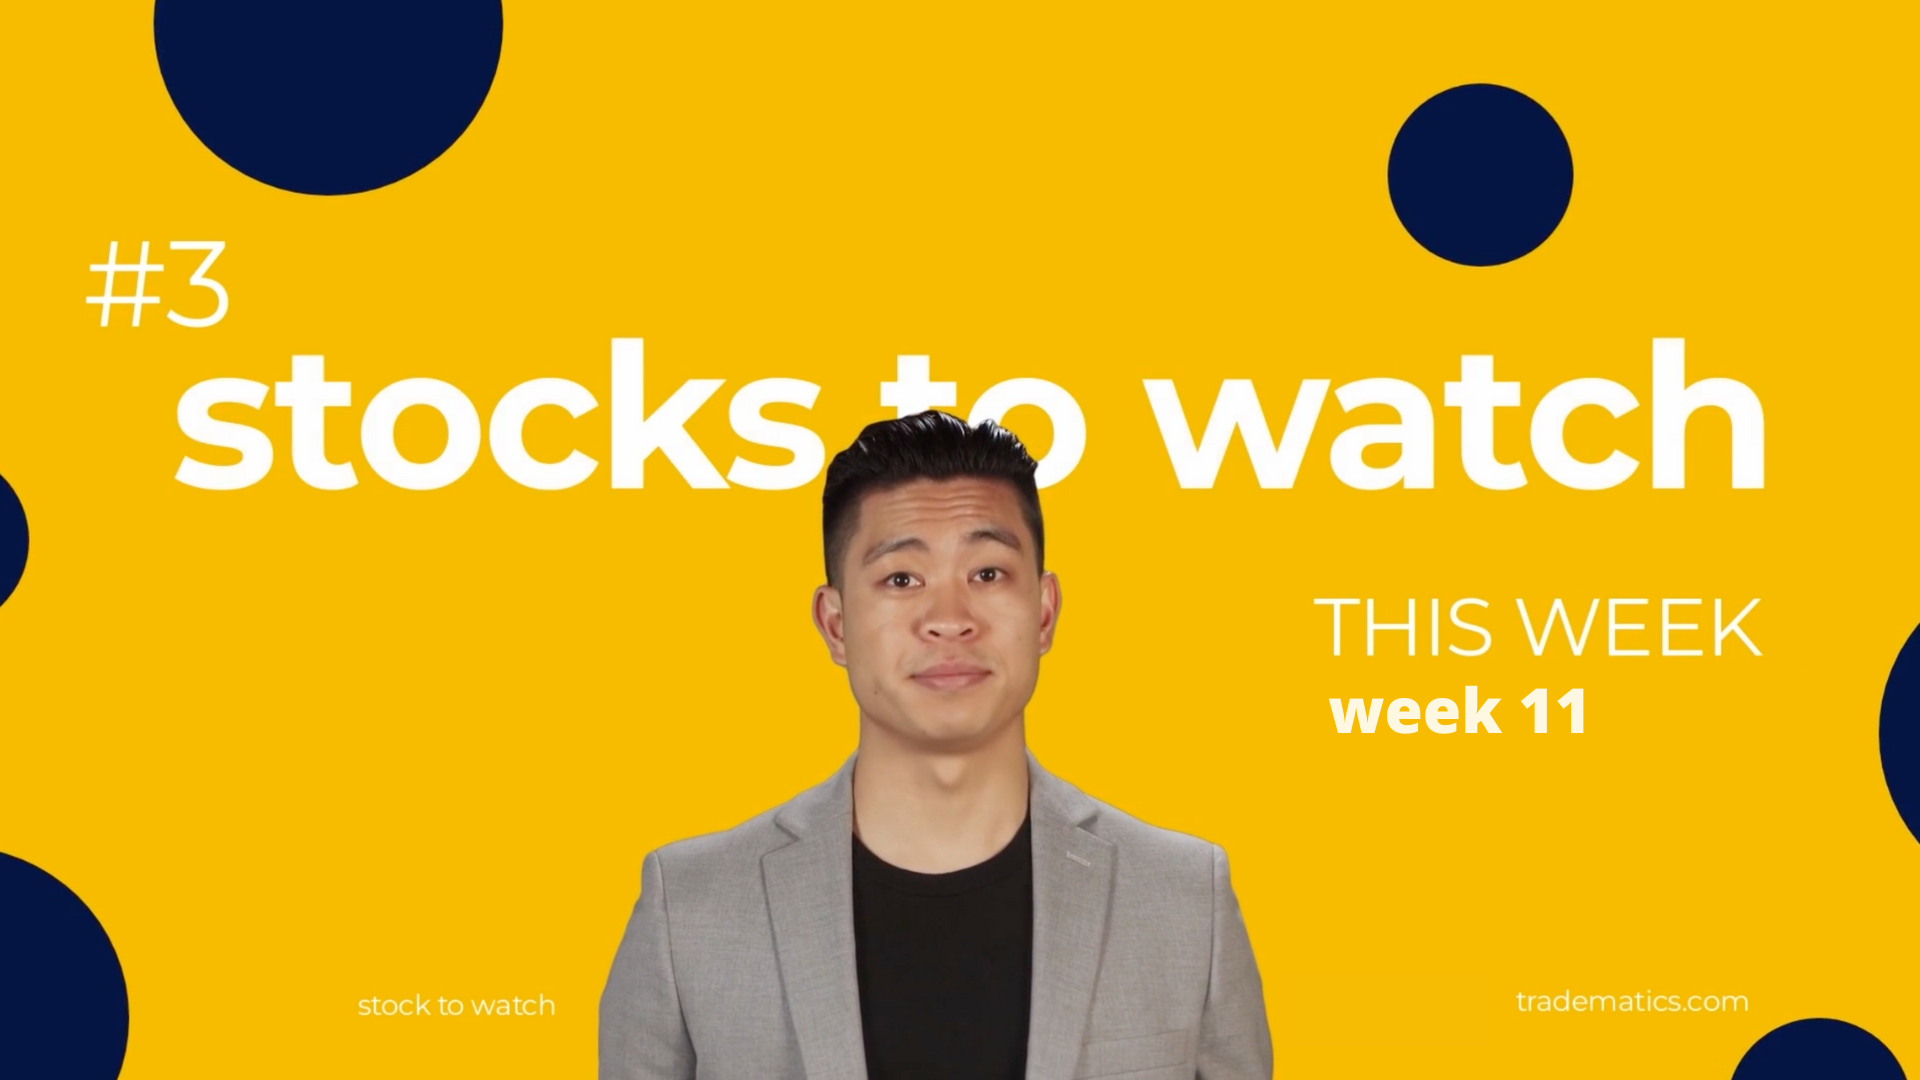 Tradematics | Stocks to Watch this week | week 11